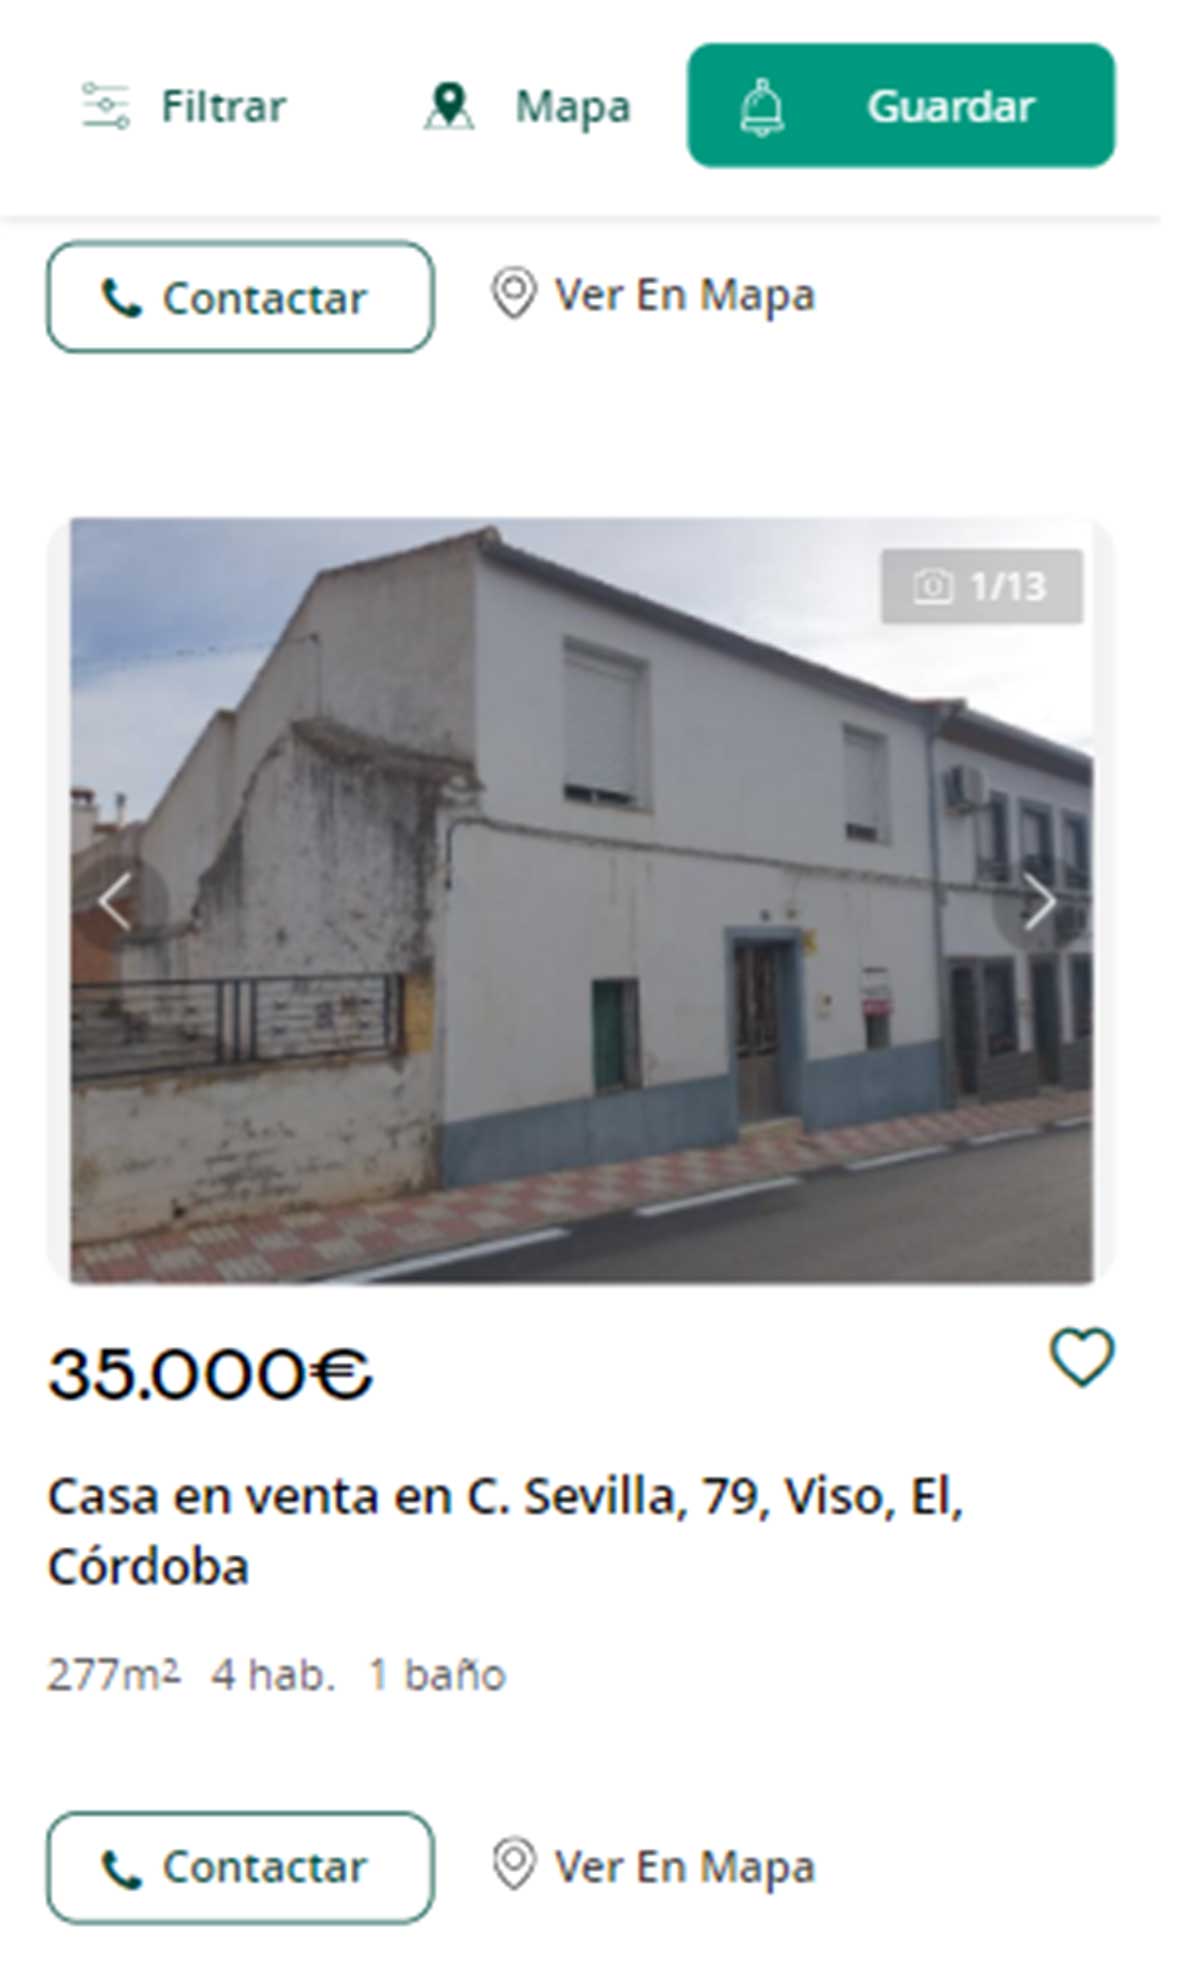 Piso a la venta en Córdoba por 35.000 euros